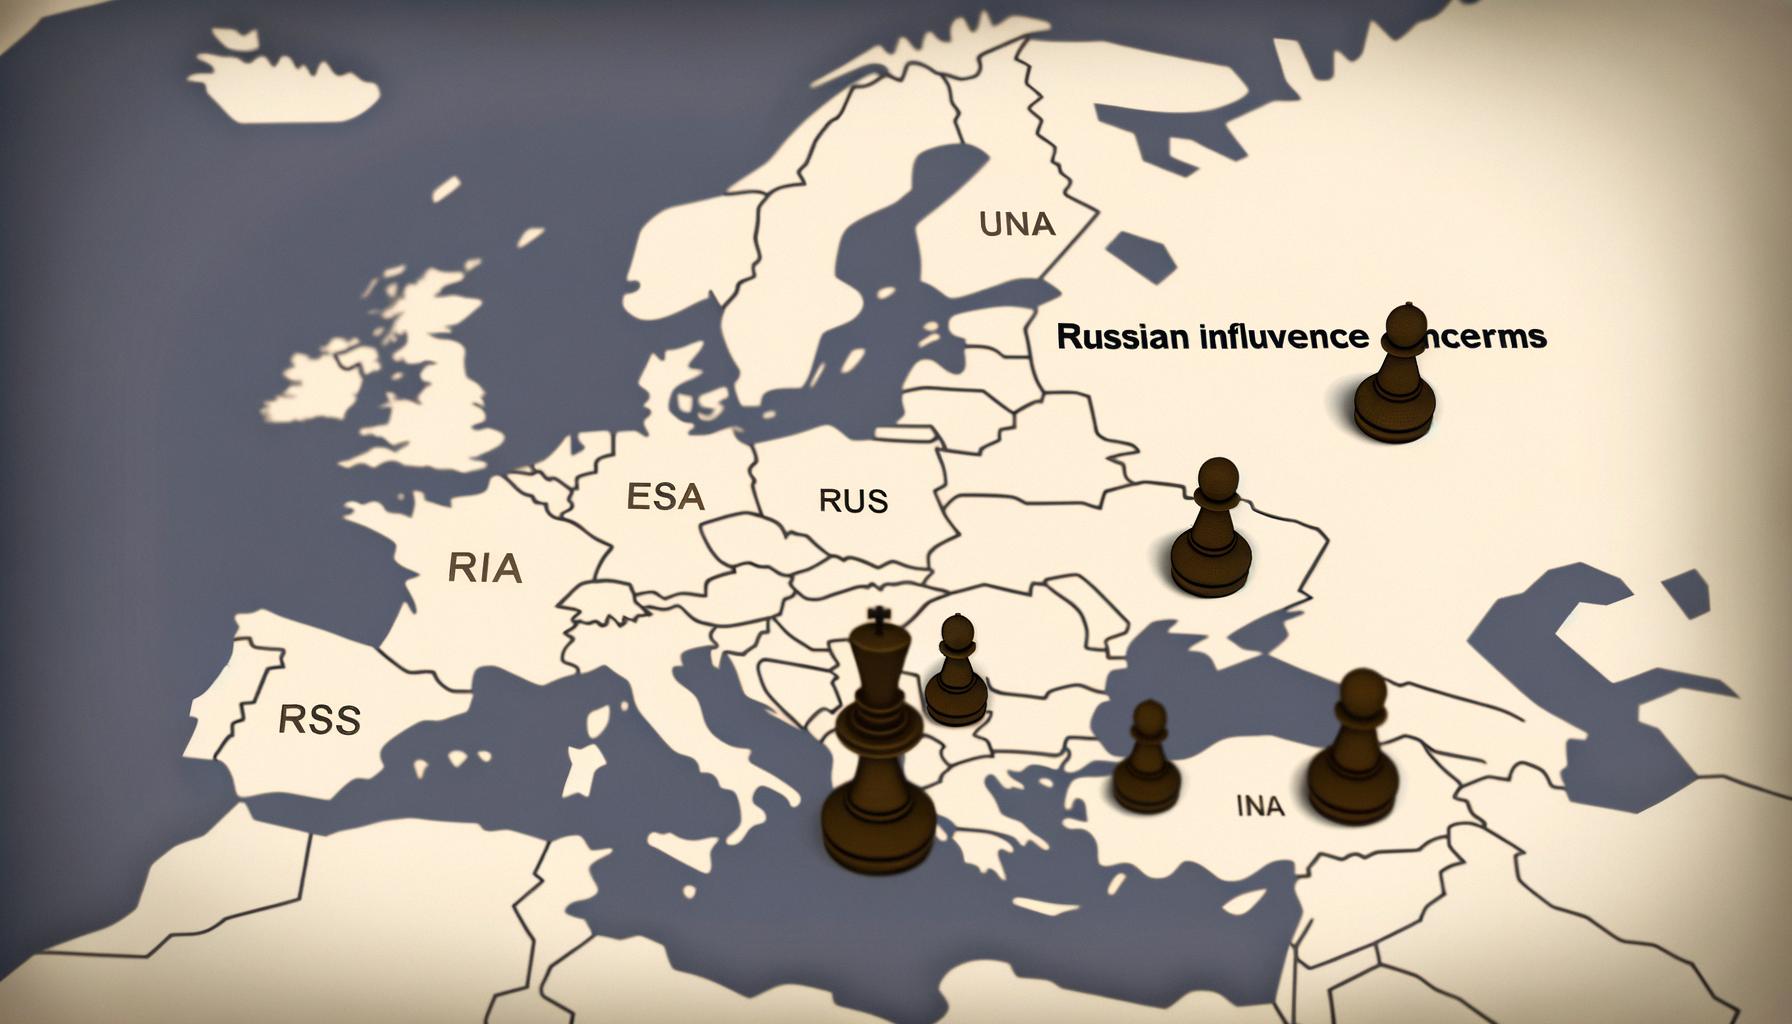 Russian influence concerns rise in EU